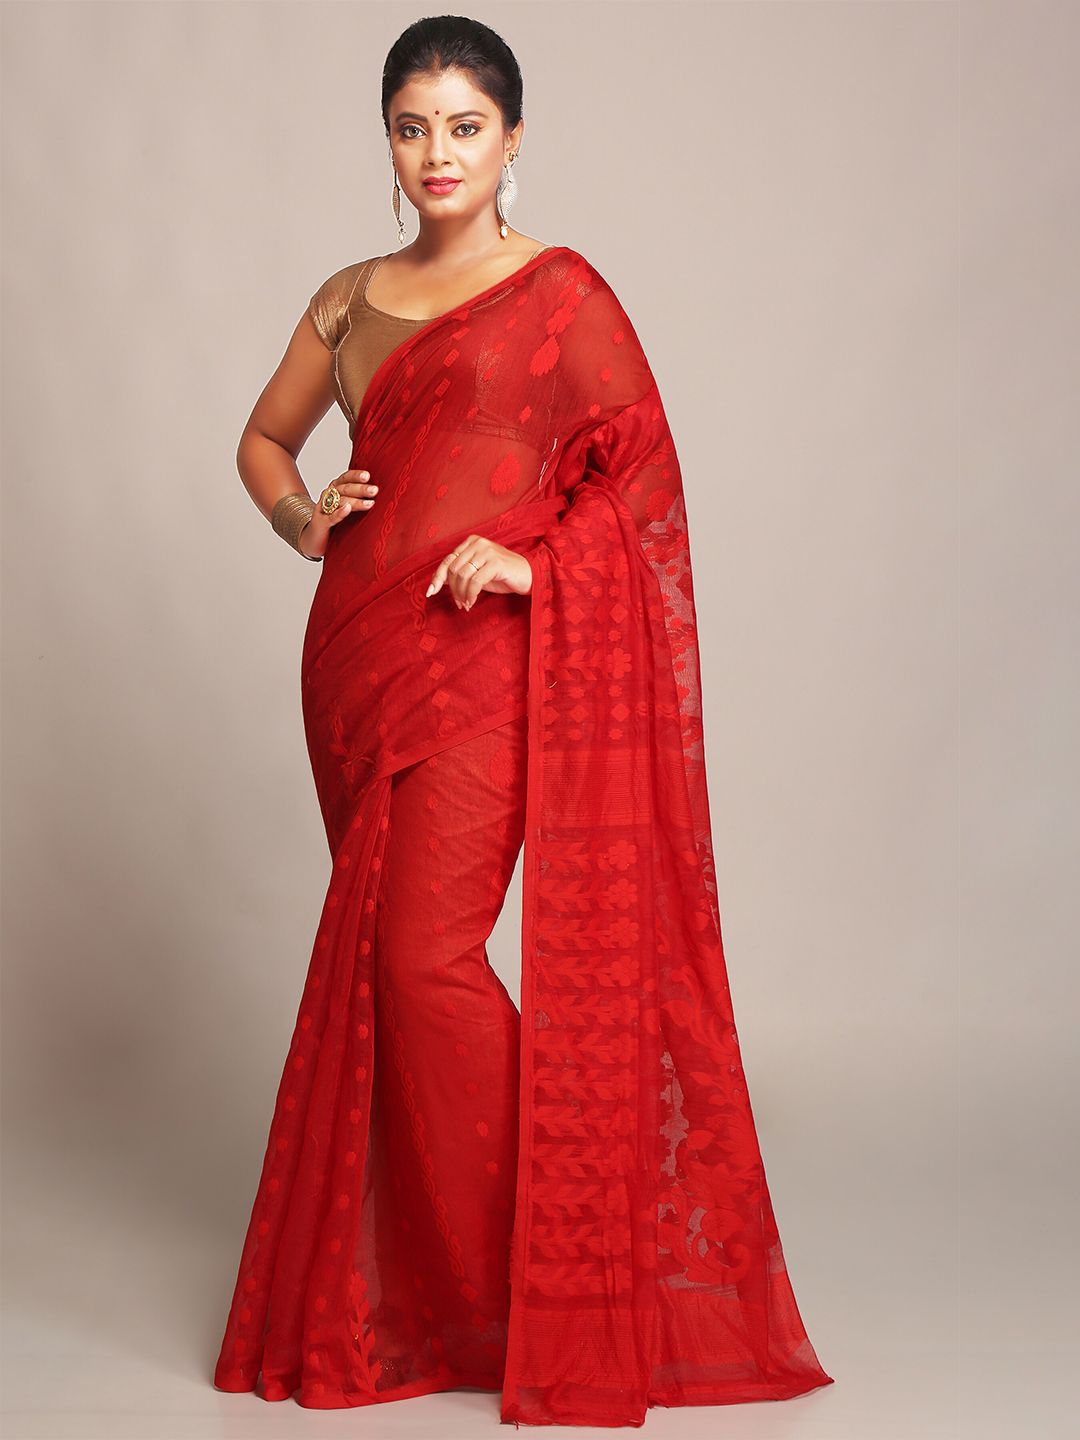 BENGAL HANDLOOM Red Ethnic Woven Design Cotton Silk Jamdani Saree Price in India